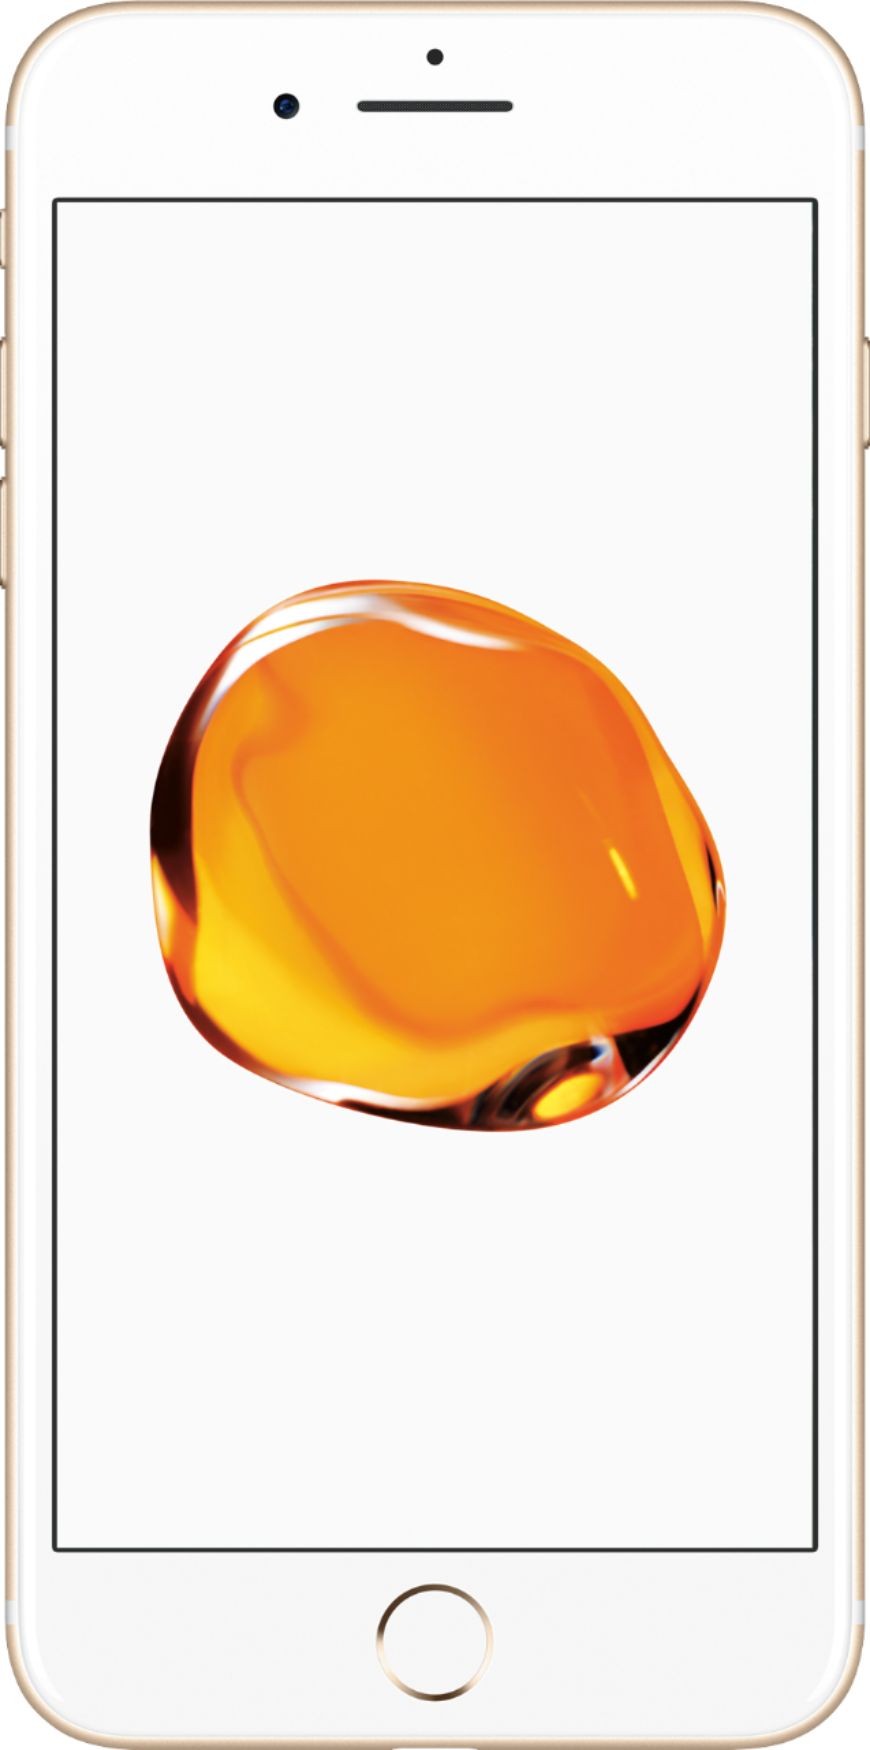 honing Regeren Egomania Best Buy: Apple iPhone 7 Plus 32GB Gold (Verizon) MNQK2LL/A